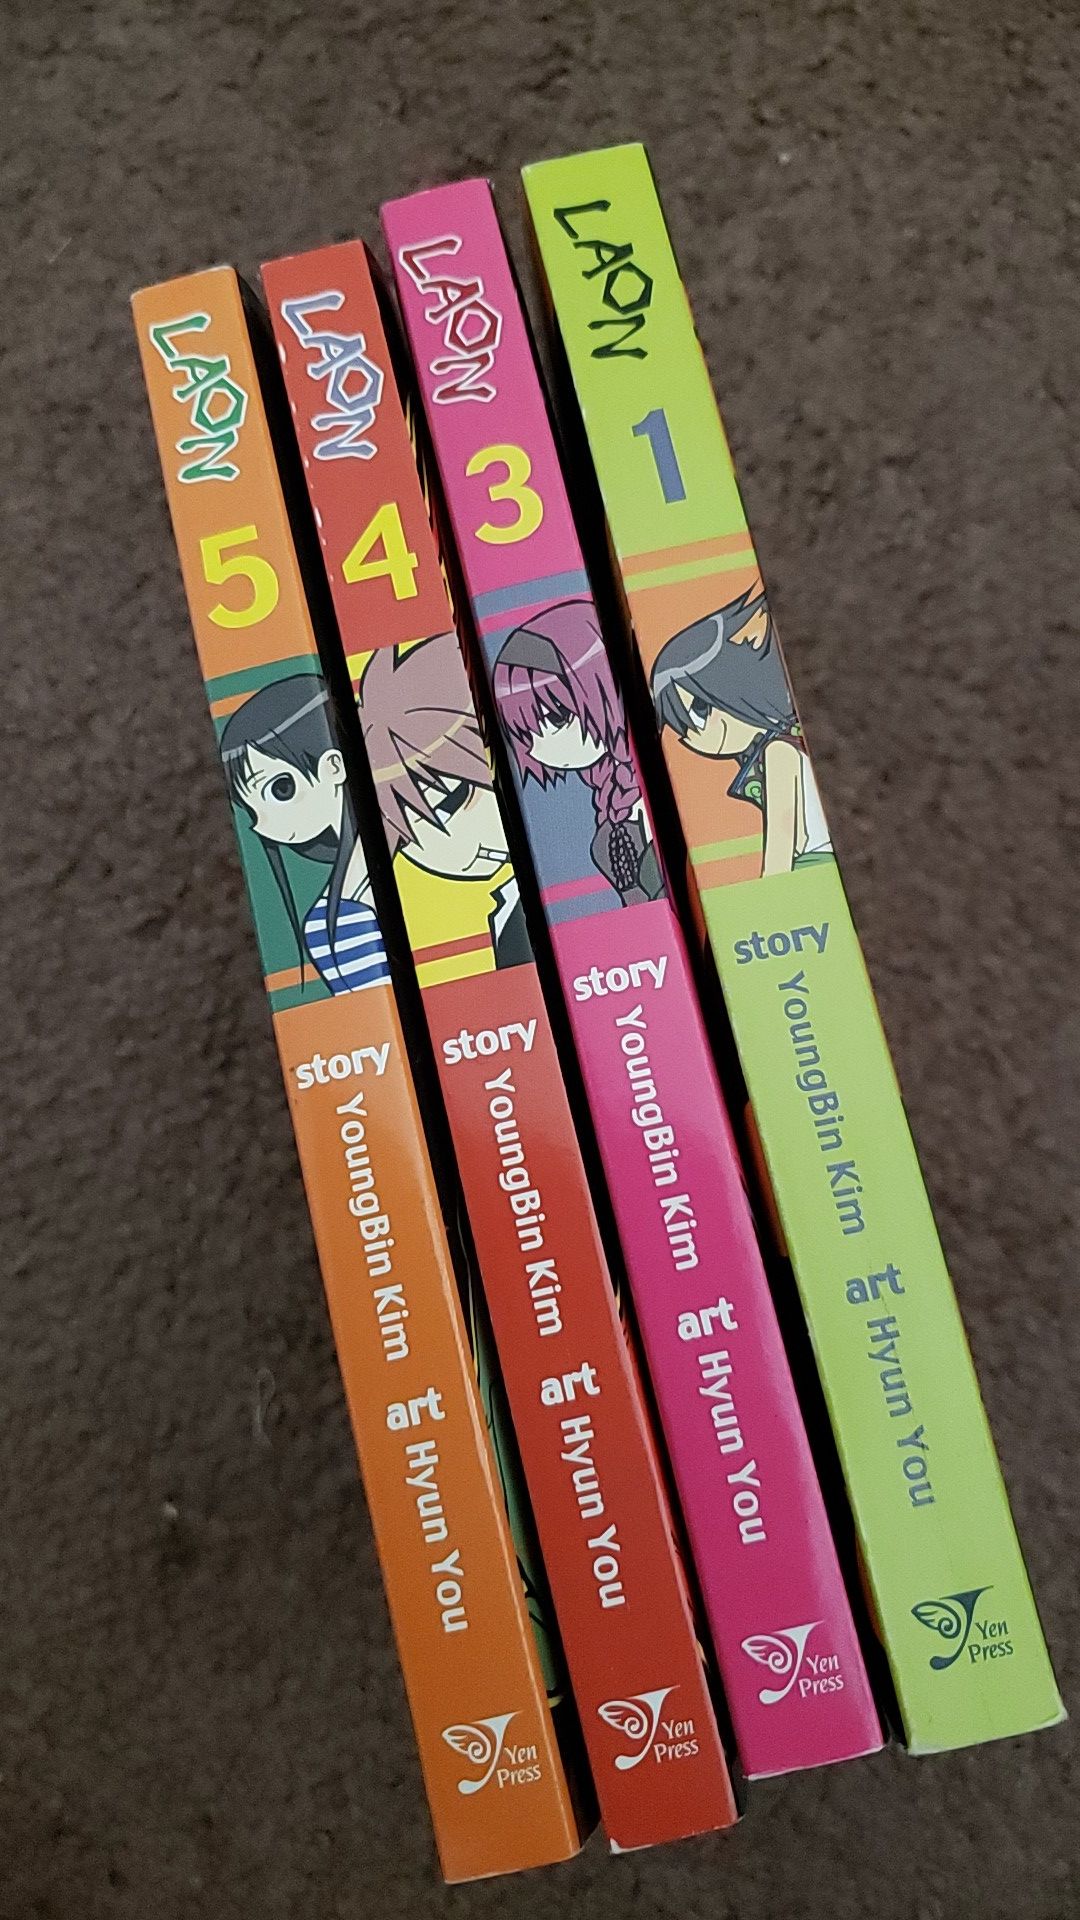 LAON Manga Vol. 1, 3, 4, and 5